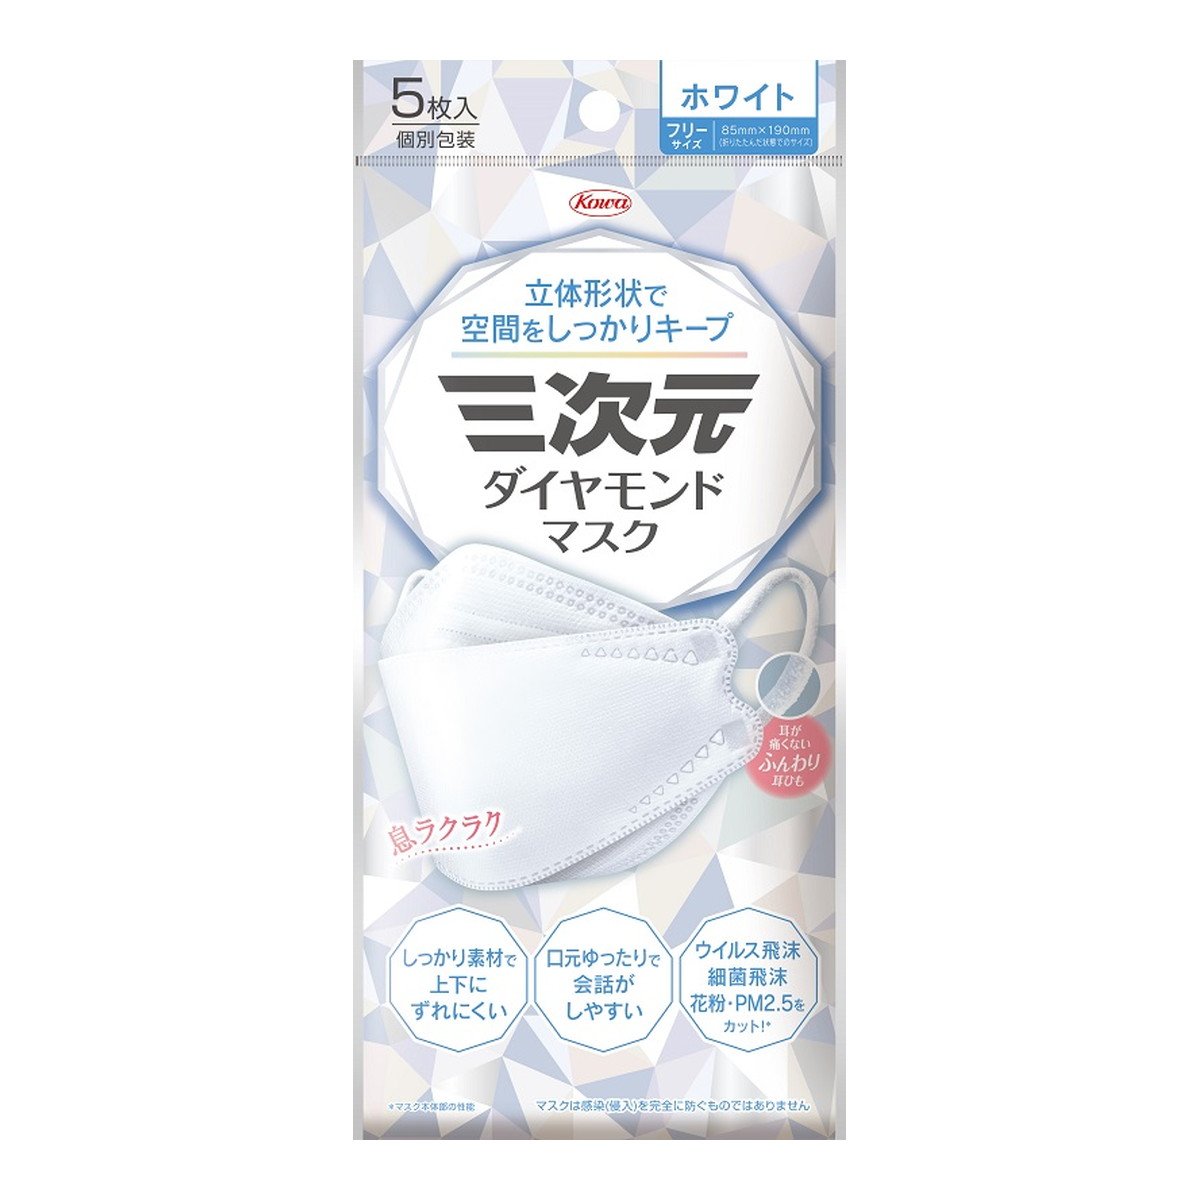 Kowa Kowa 三次元ダイヤモンドマスク フリーサイズ ホワイト 個別包装 5枚入 × 1個 三次元マスク 衛生用品マスクの商品画像